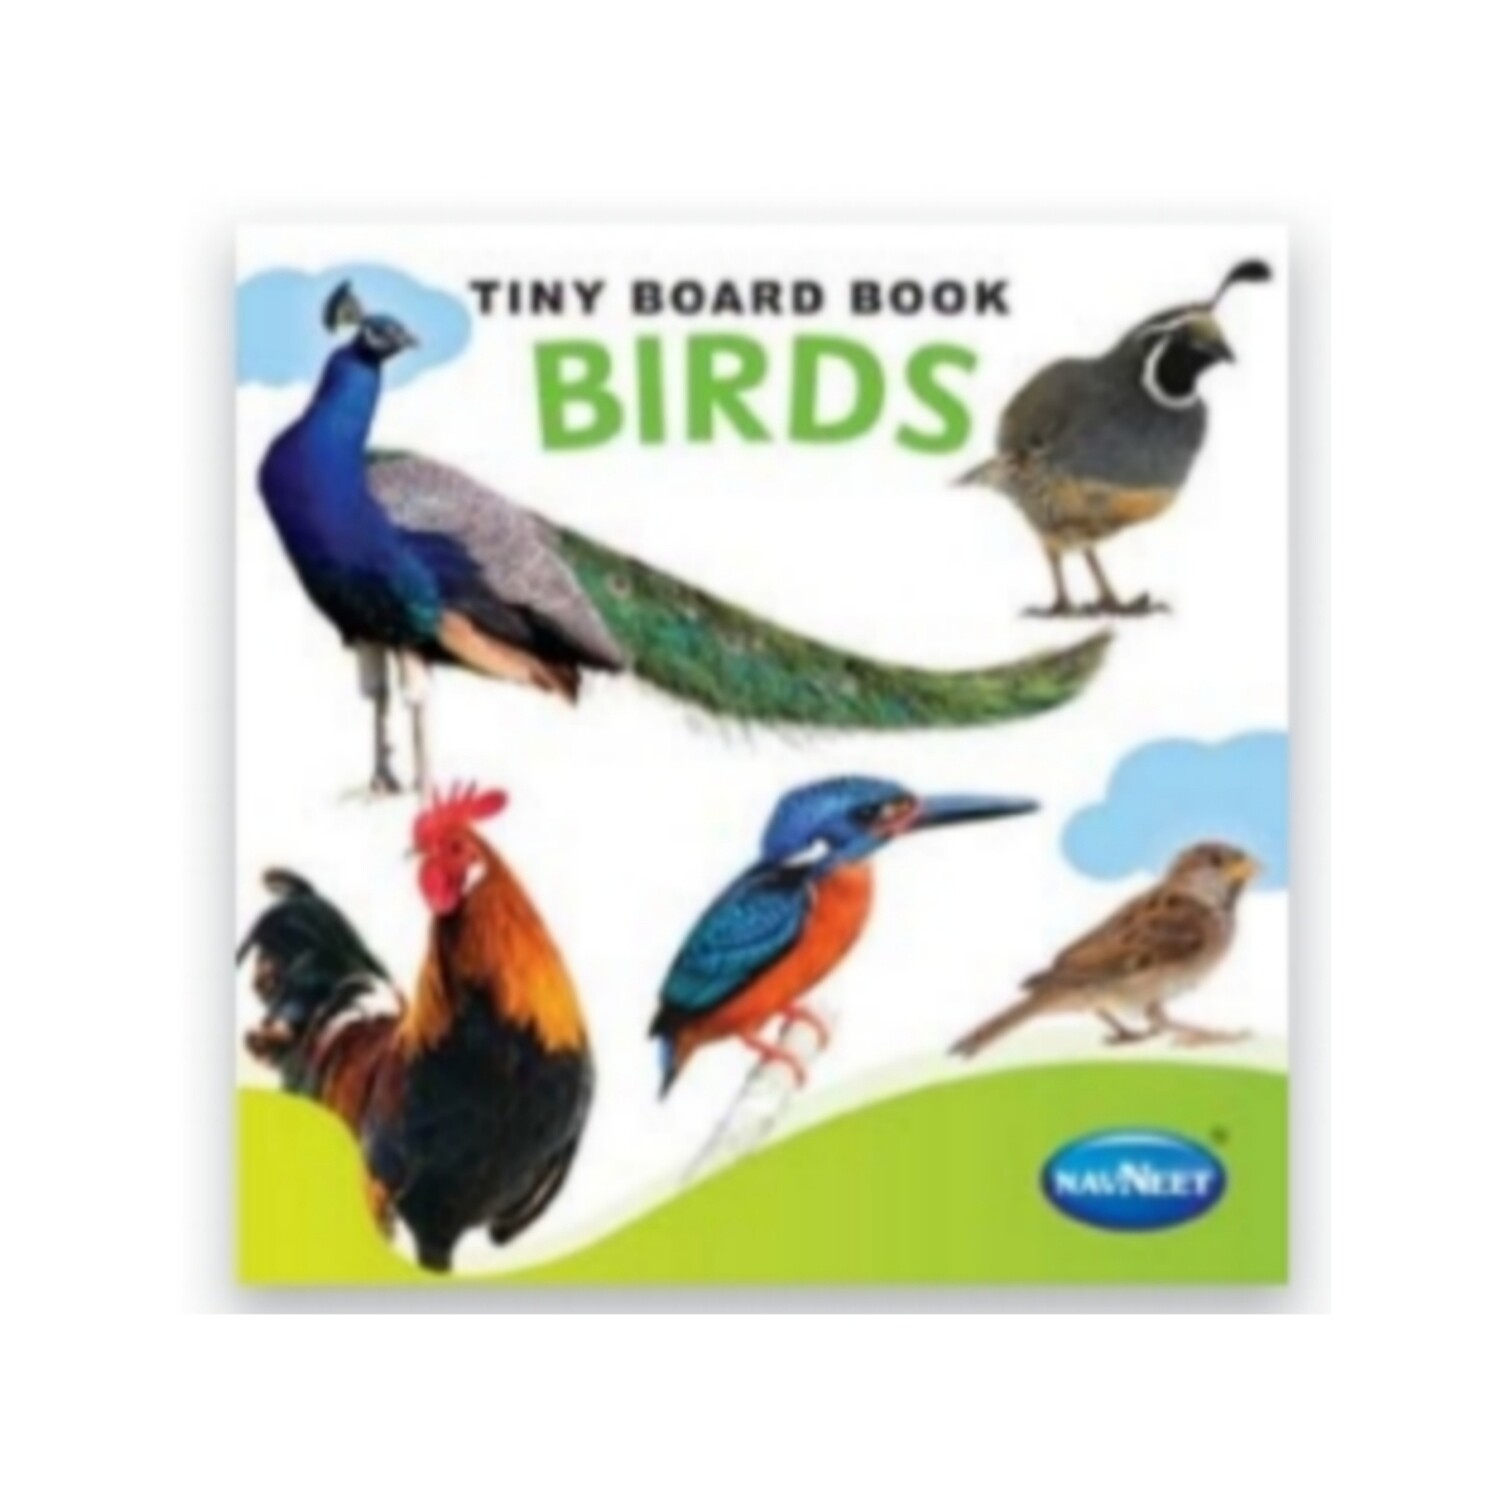 Tiny Board Books (English Edition) - Birds